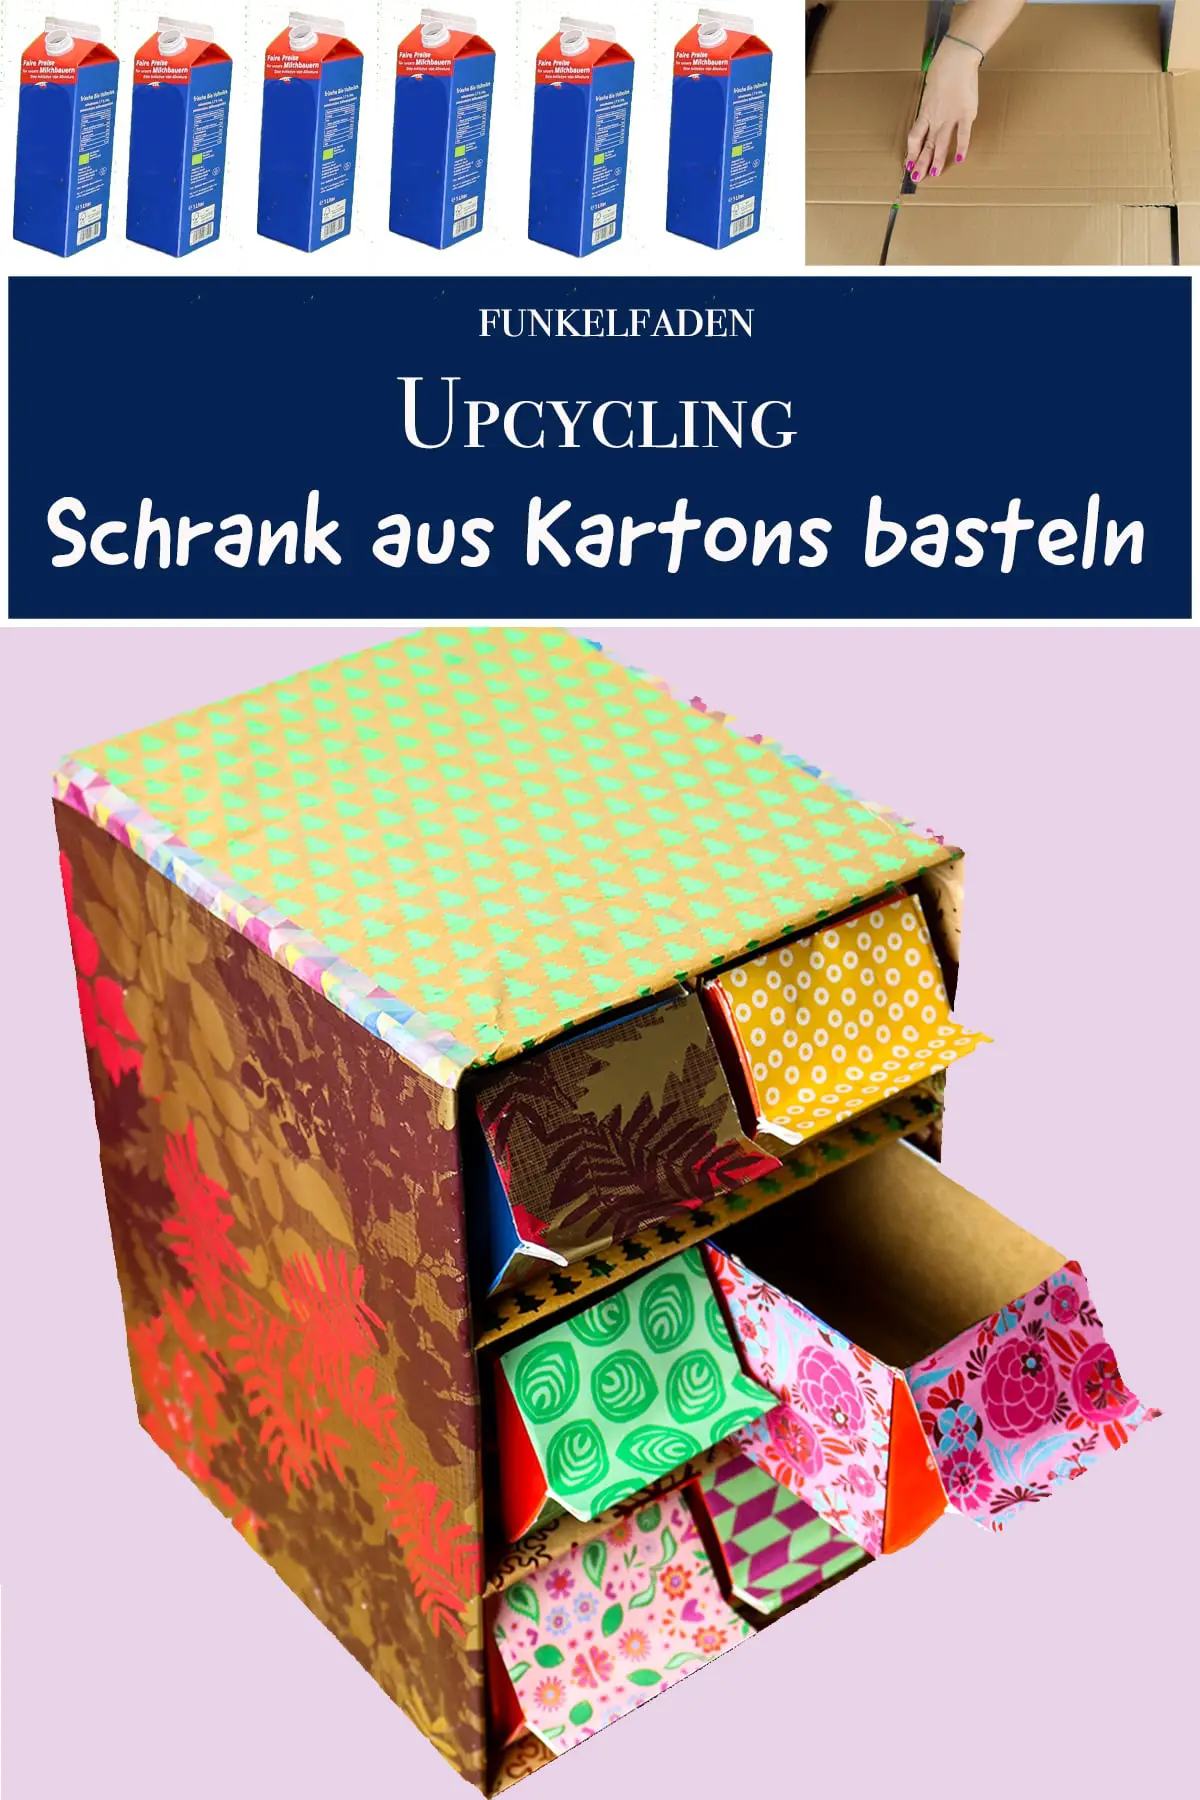 Upycycling Anleitung - Basteln mit Tetra-Packs und Kartons